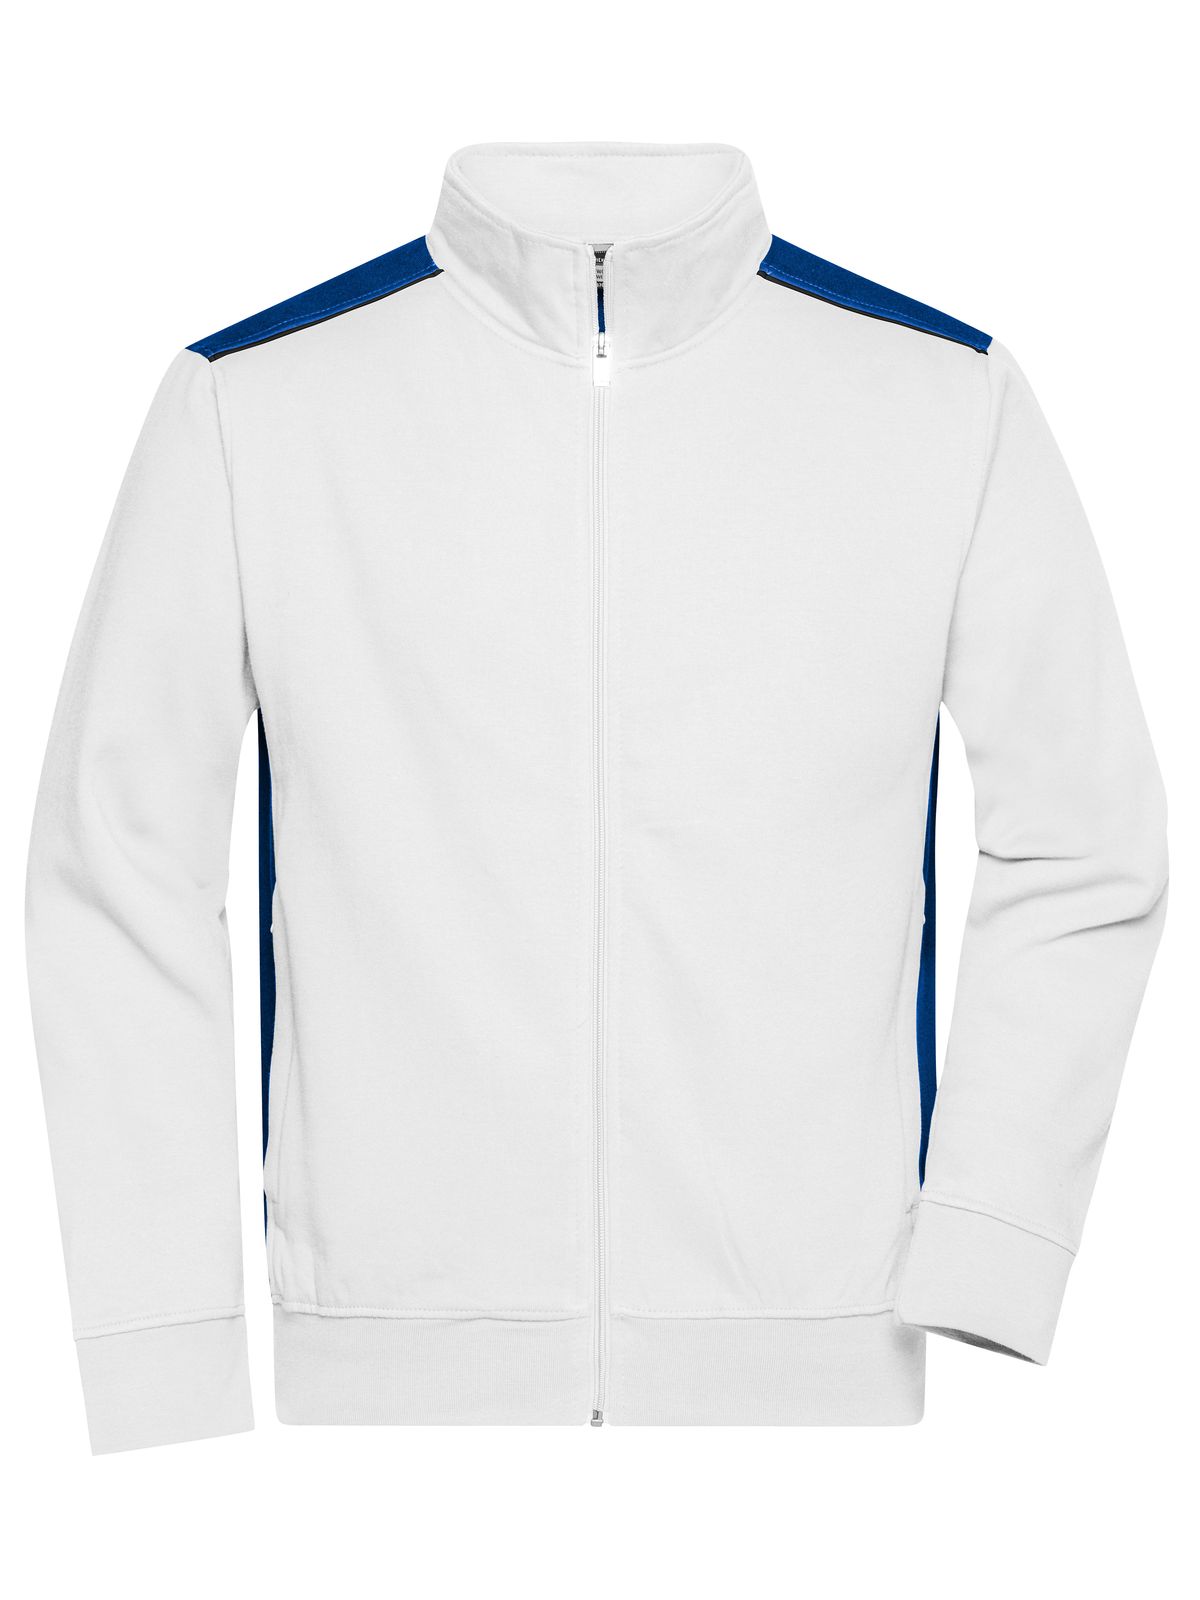 mens-workwear-sweat-jacket-color-white-royal.webp